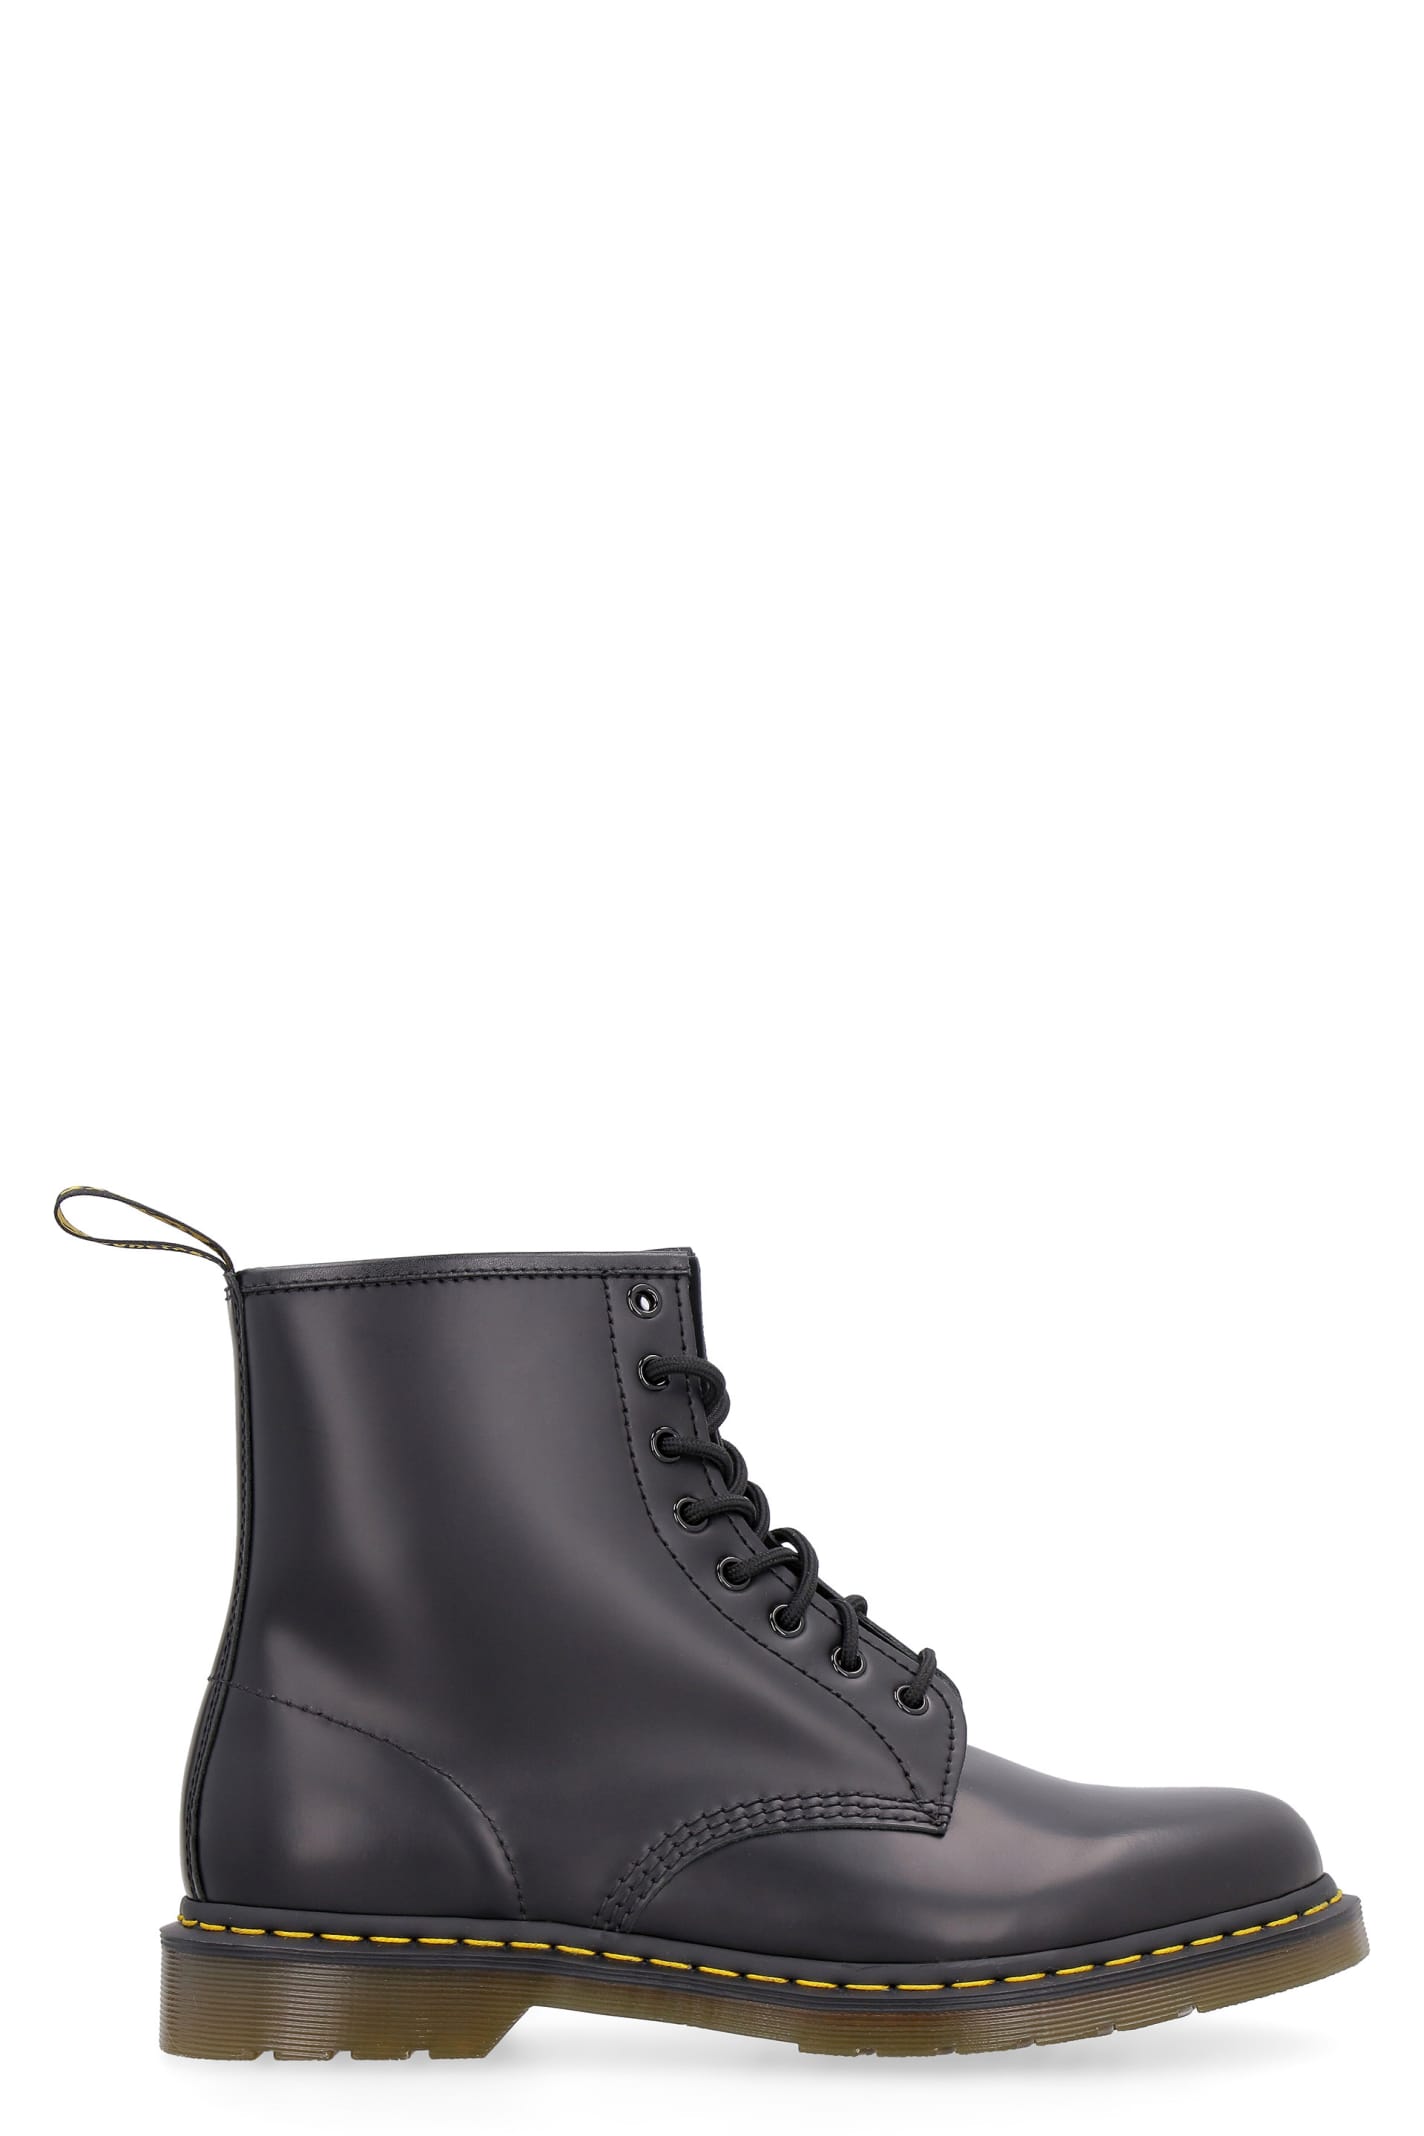 Dr. Martens 1460 Leather Combat Boots